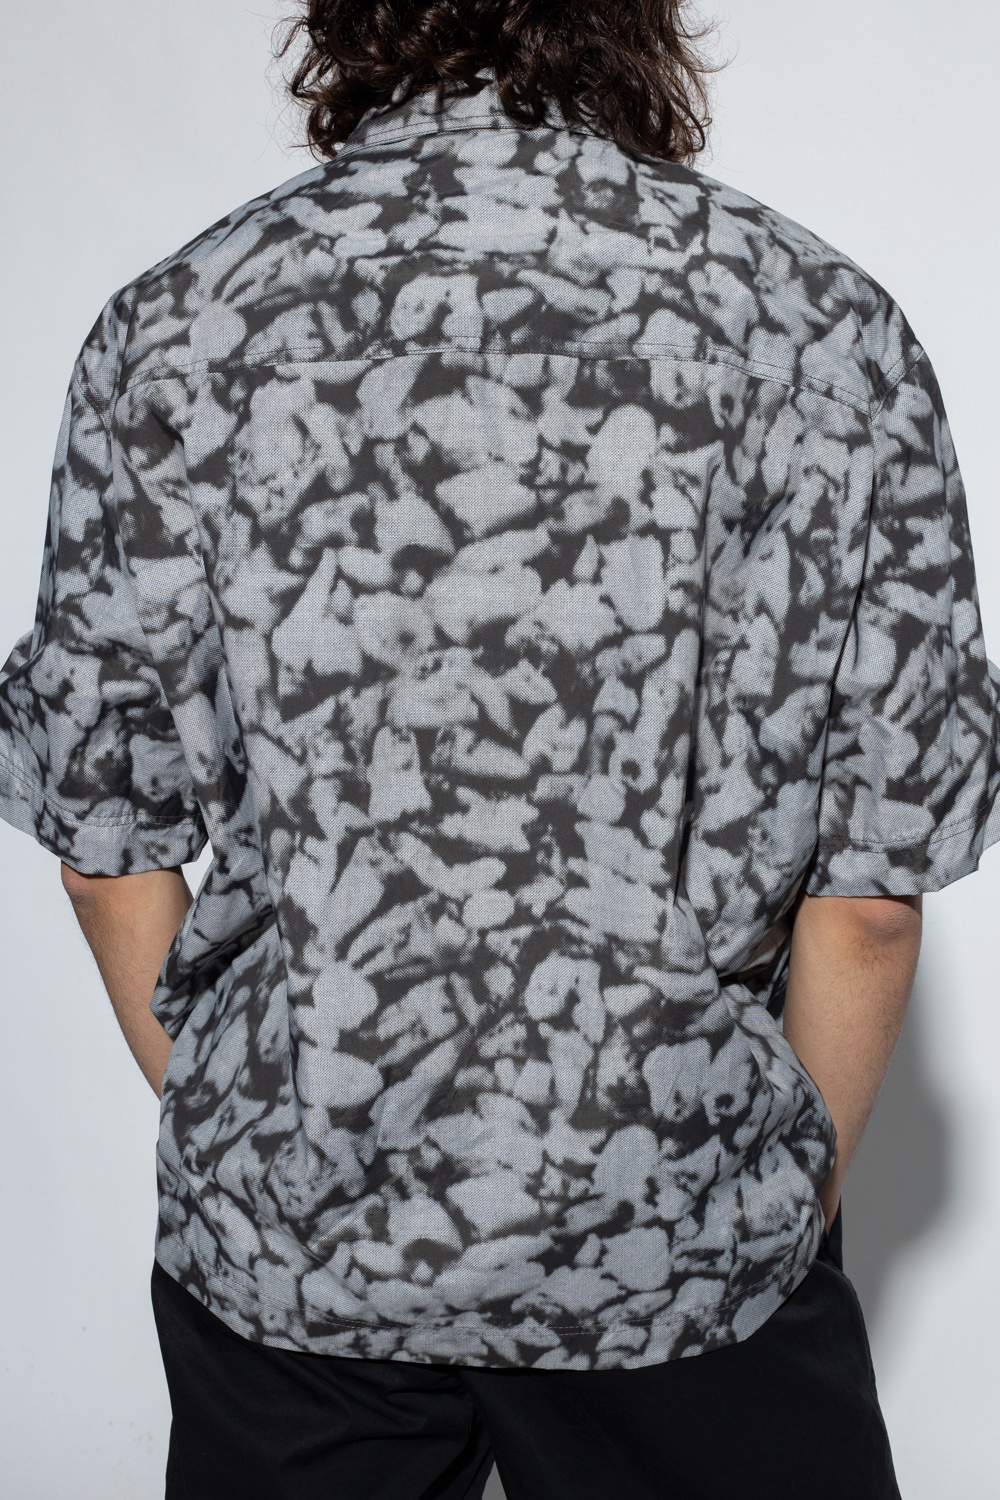 44 Label Group A BATHING APE® camouflage shark print cotton T-shirt